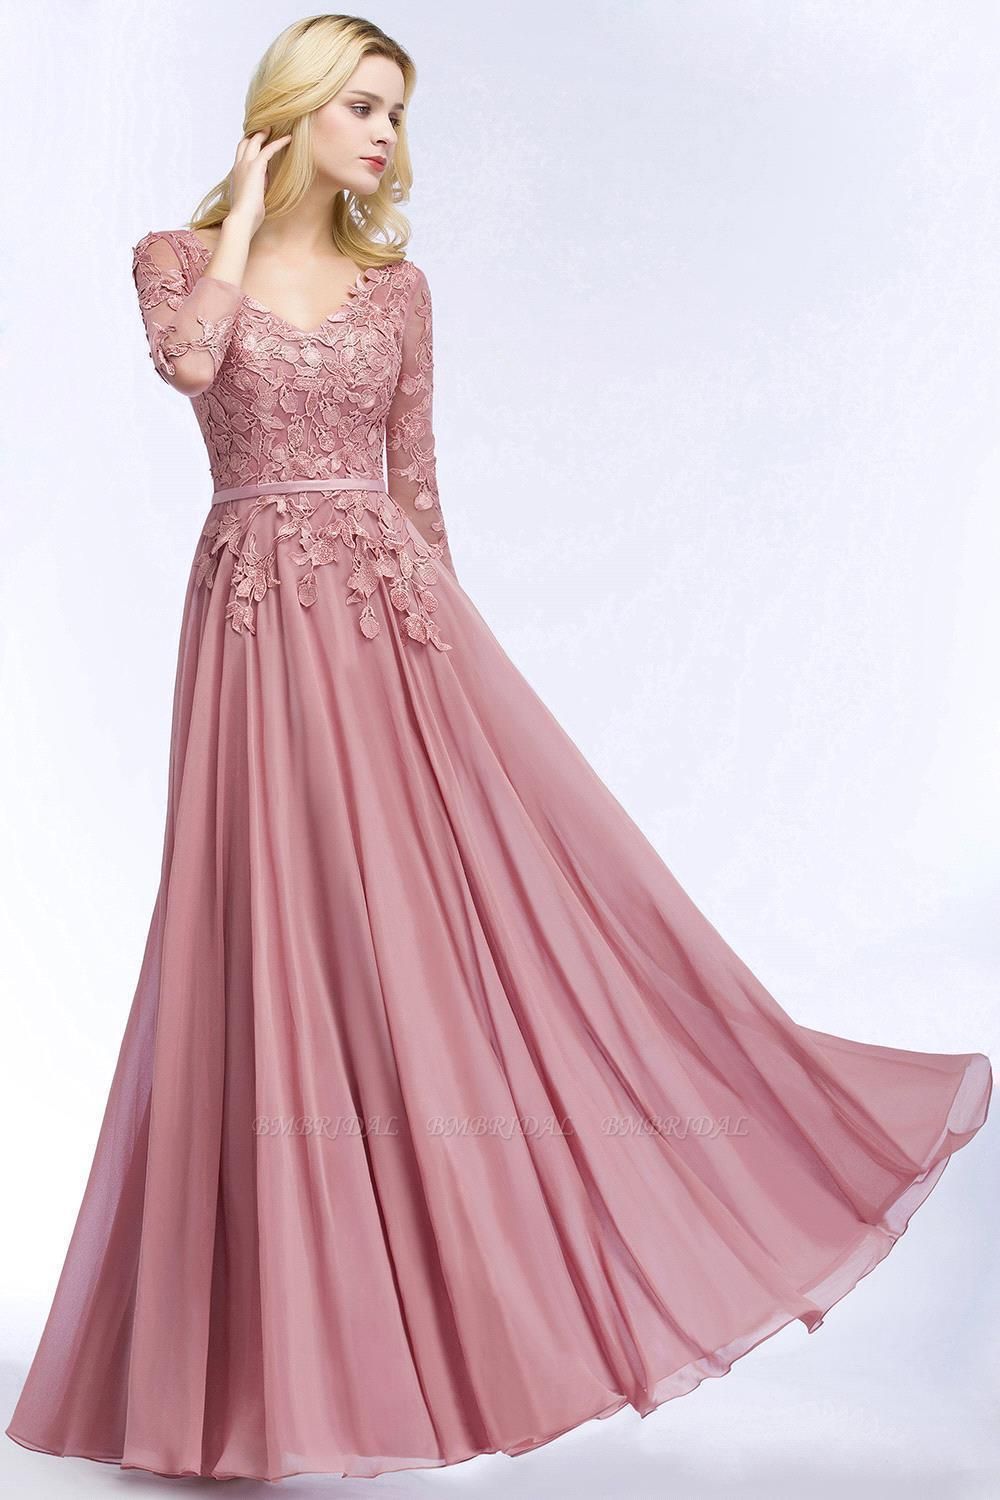 BMbridal Elegant Chiffon Lace Dusty Rose Evening Dress